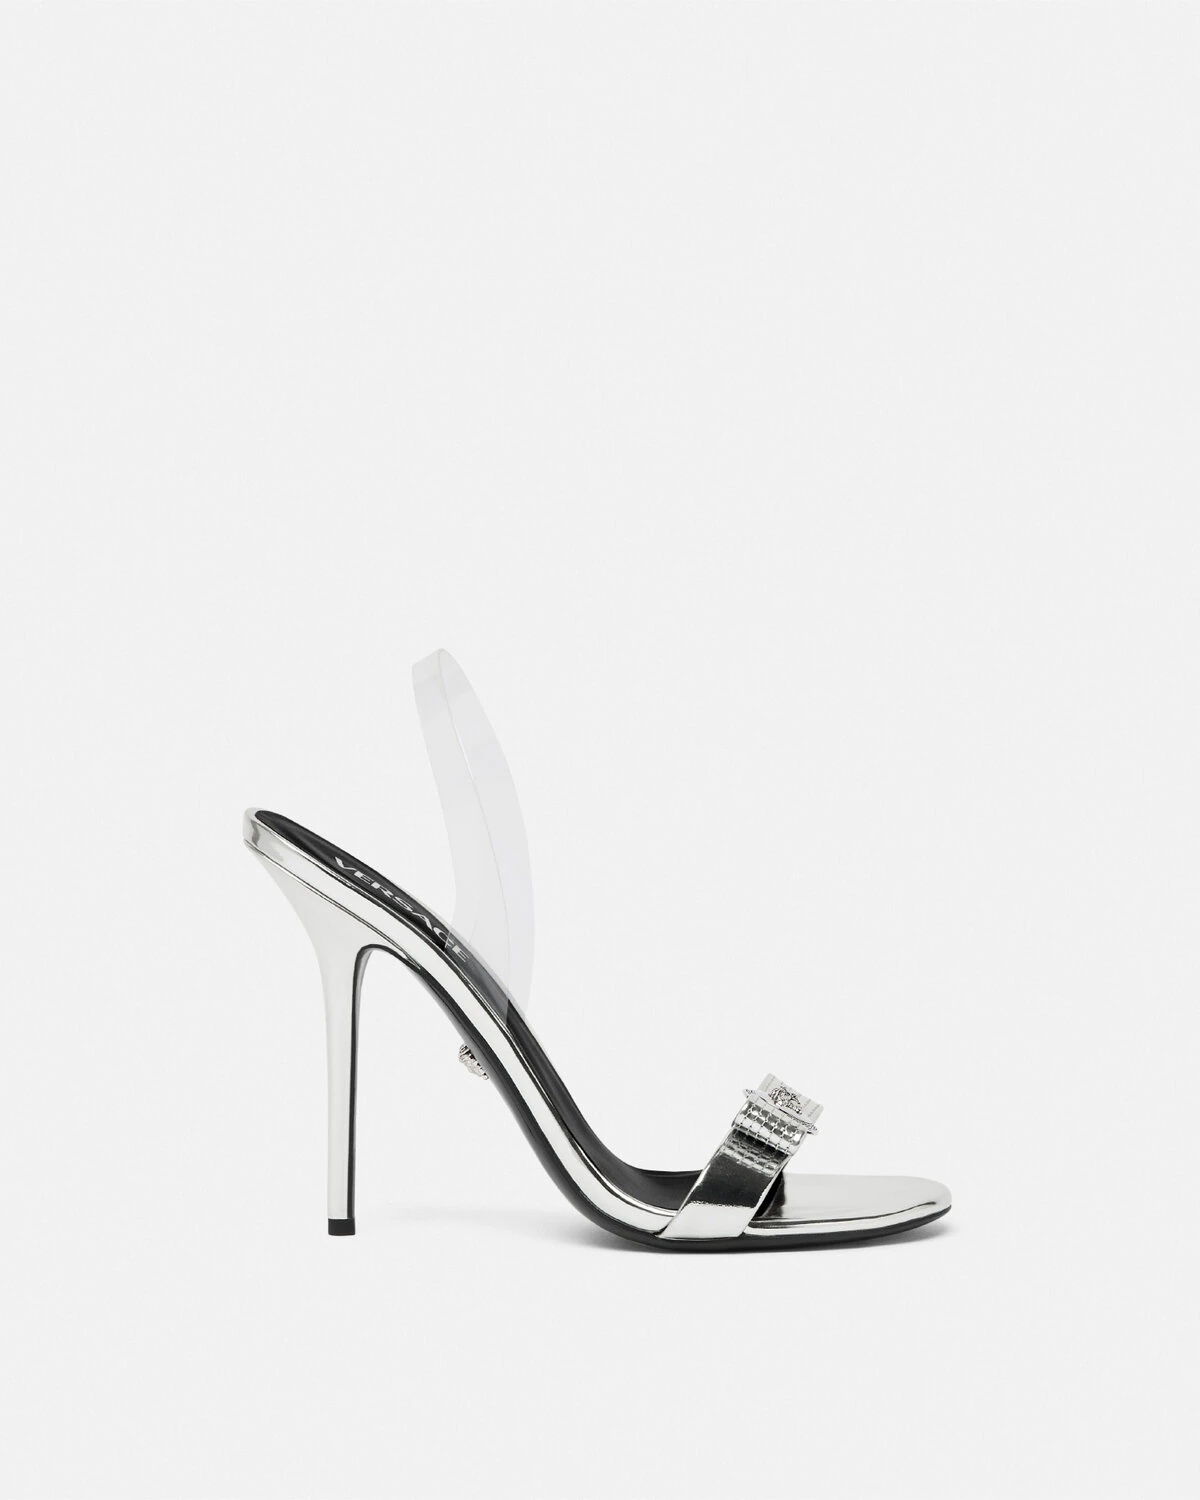 Gianni Ribbon Metallic Sandals 4.3" / 110 mm - 1